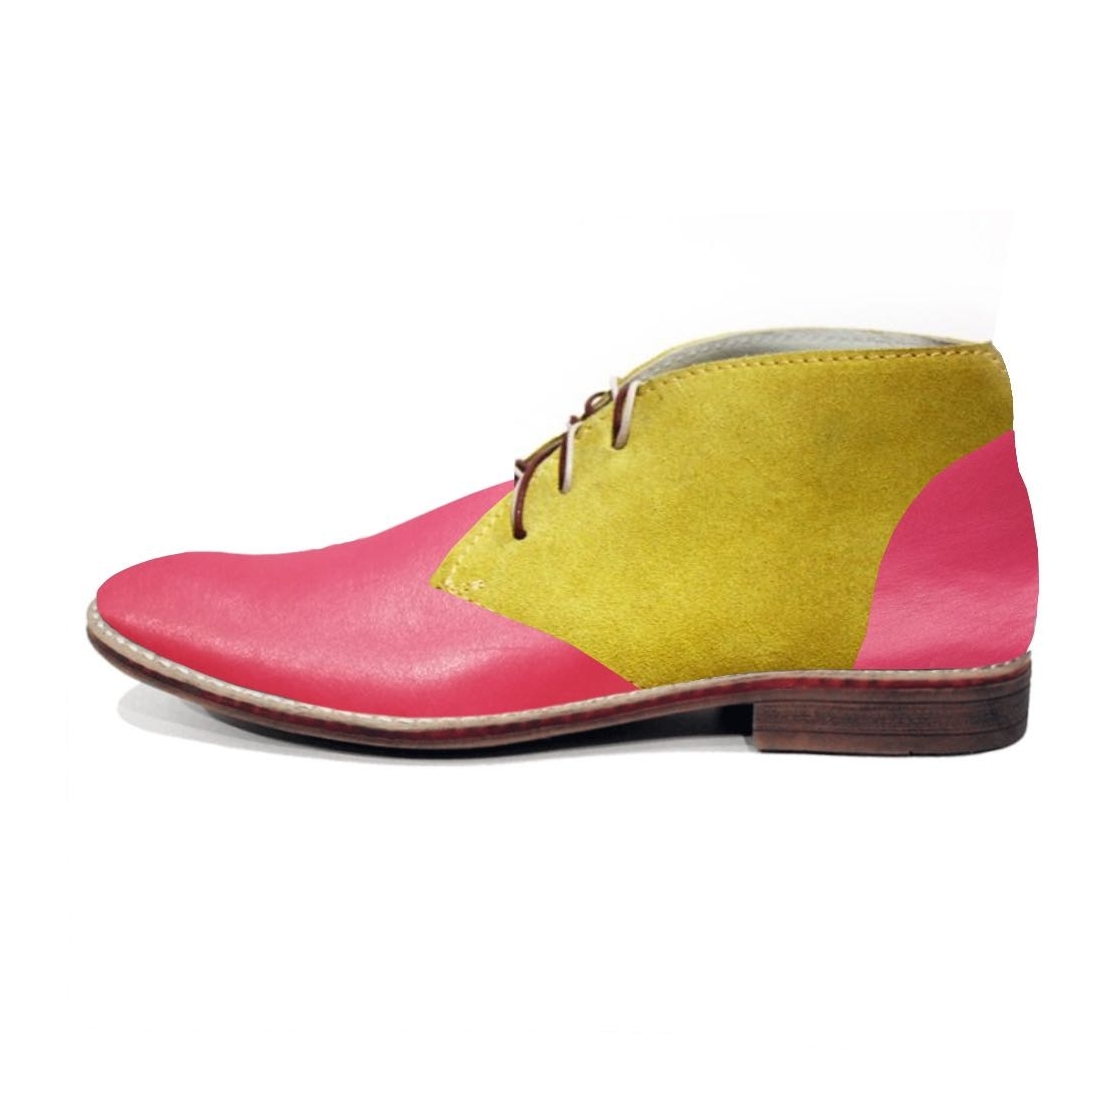 Modello Primavello - Desert Boots - Handmade Colorful Italian Leather Shoes